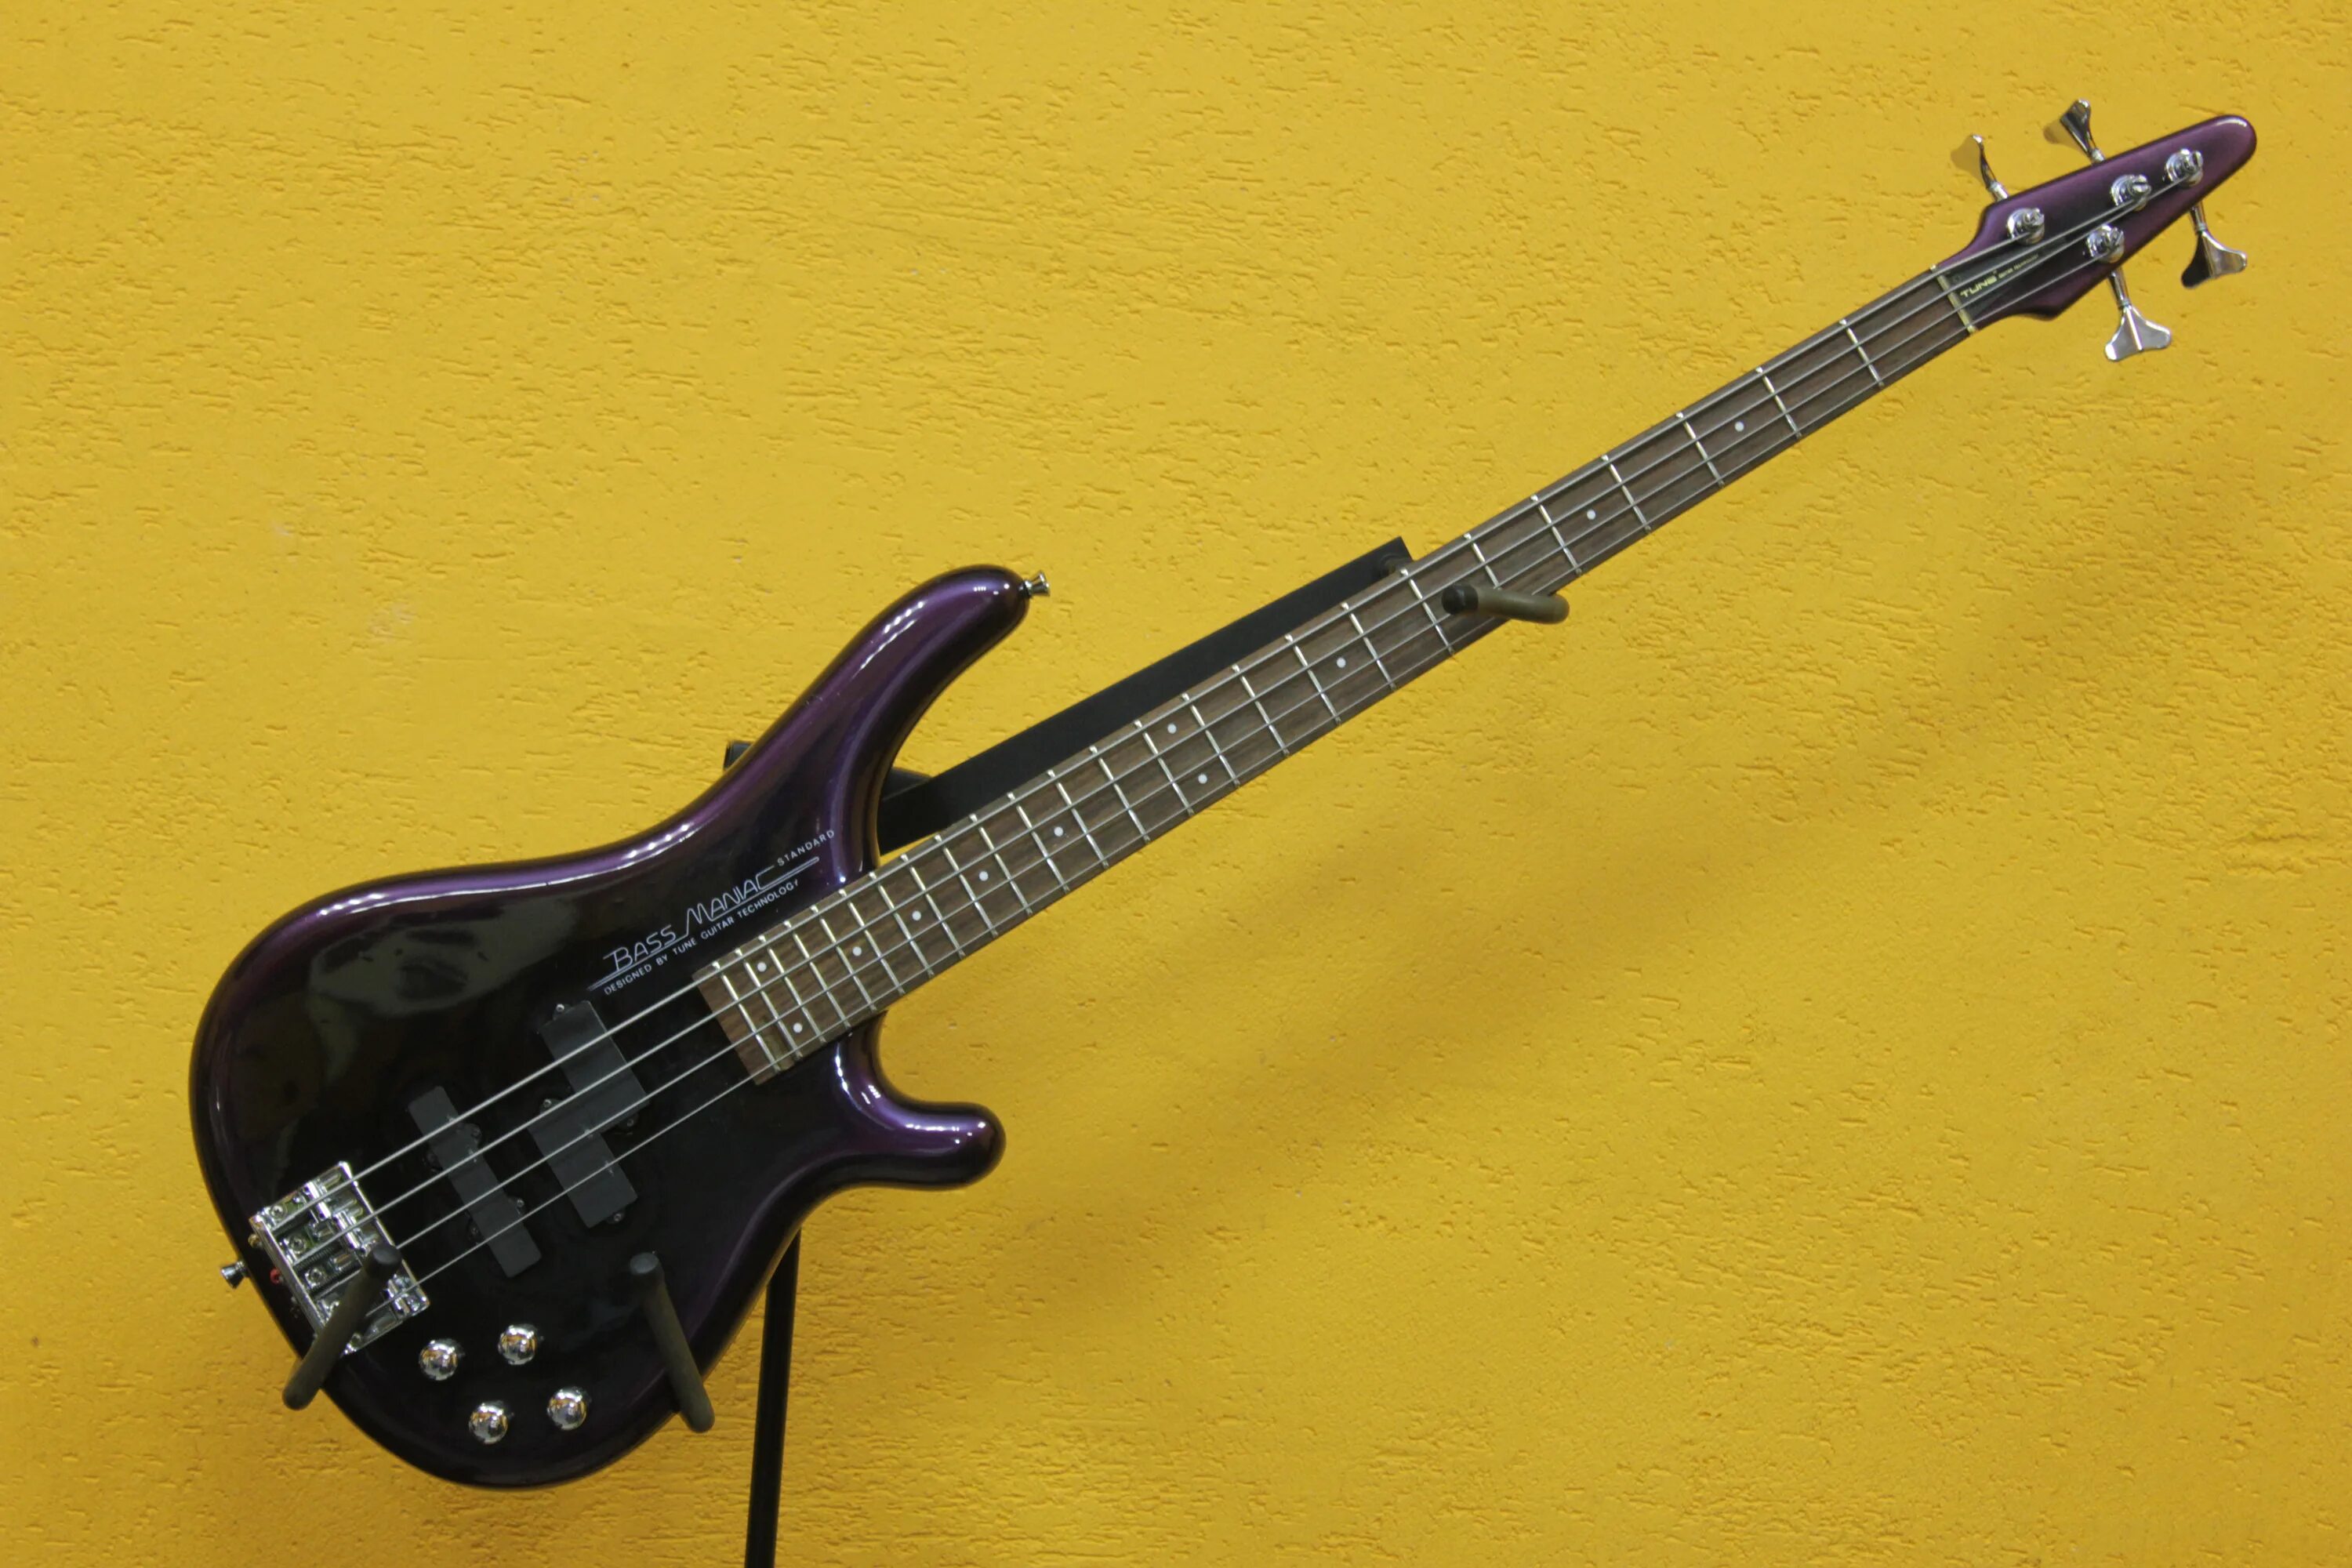 Tune Bass Maniac. Tune TB-4 PJ Bass Maniac Standard. Tune Bass Maniac 05. Tune Bass Maniac TBJ 1. Bass tuning